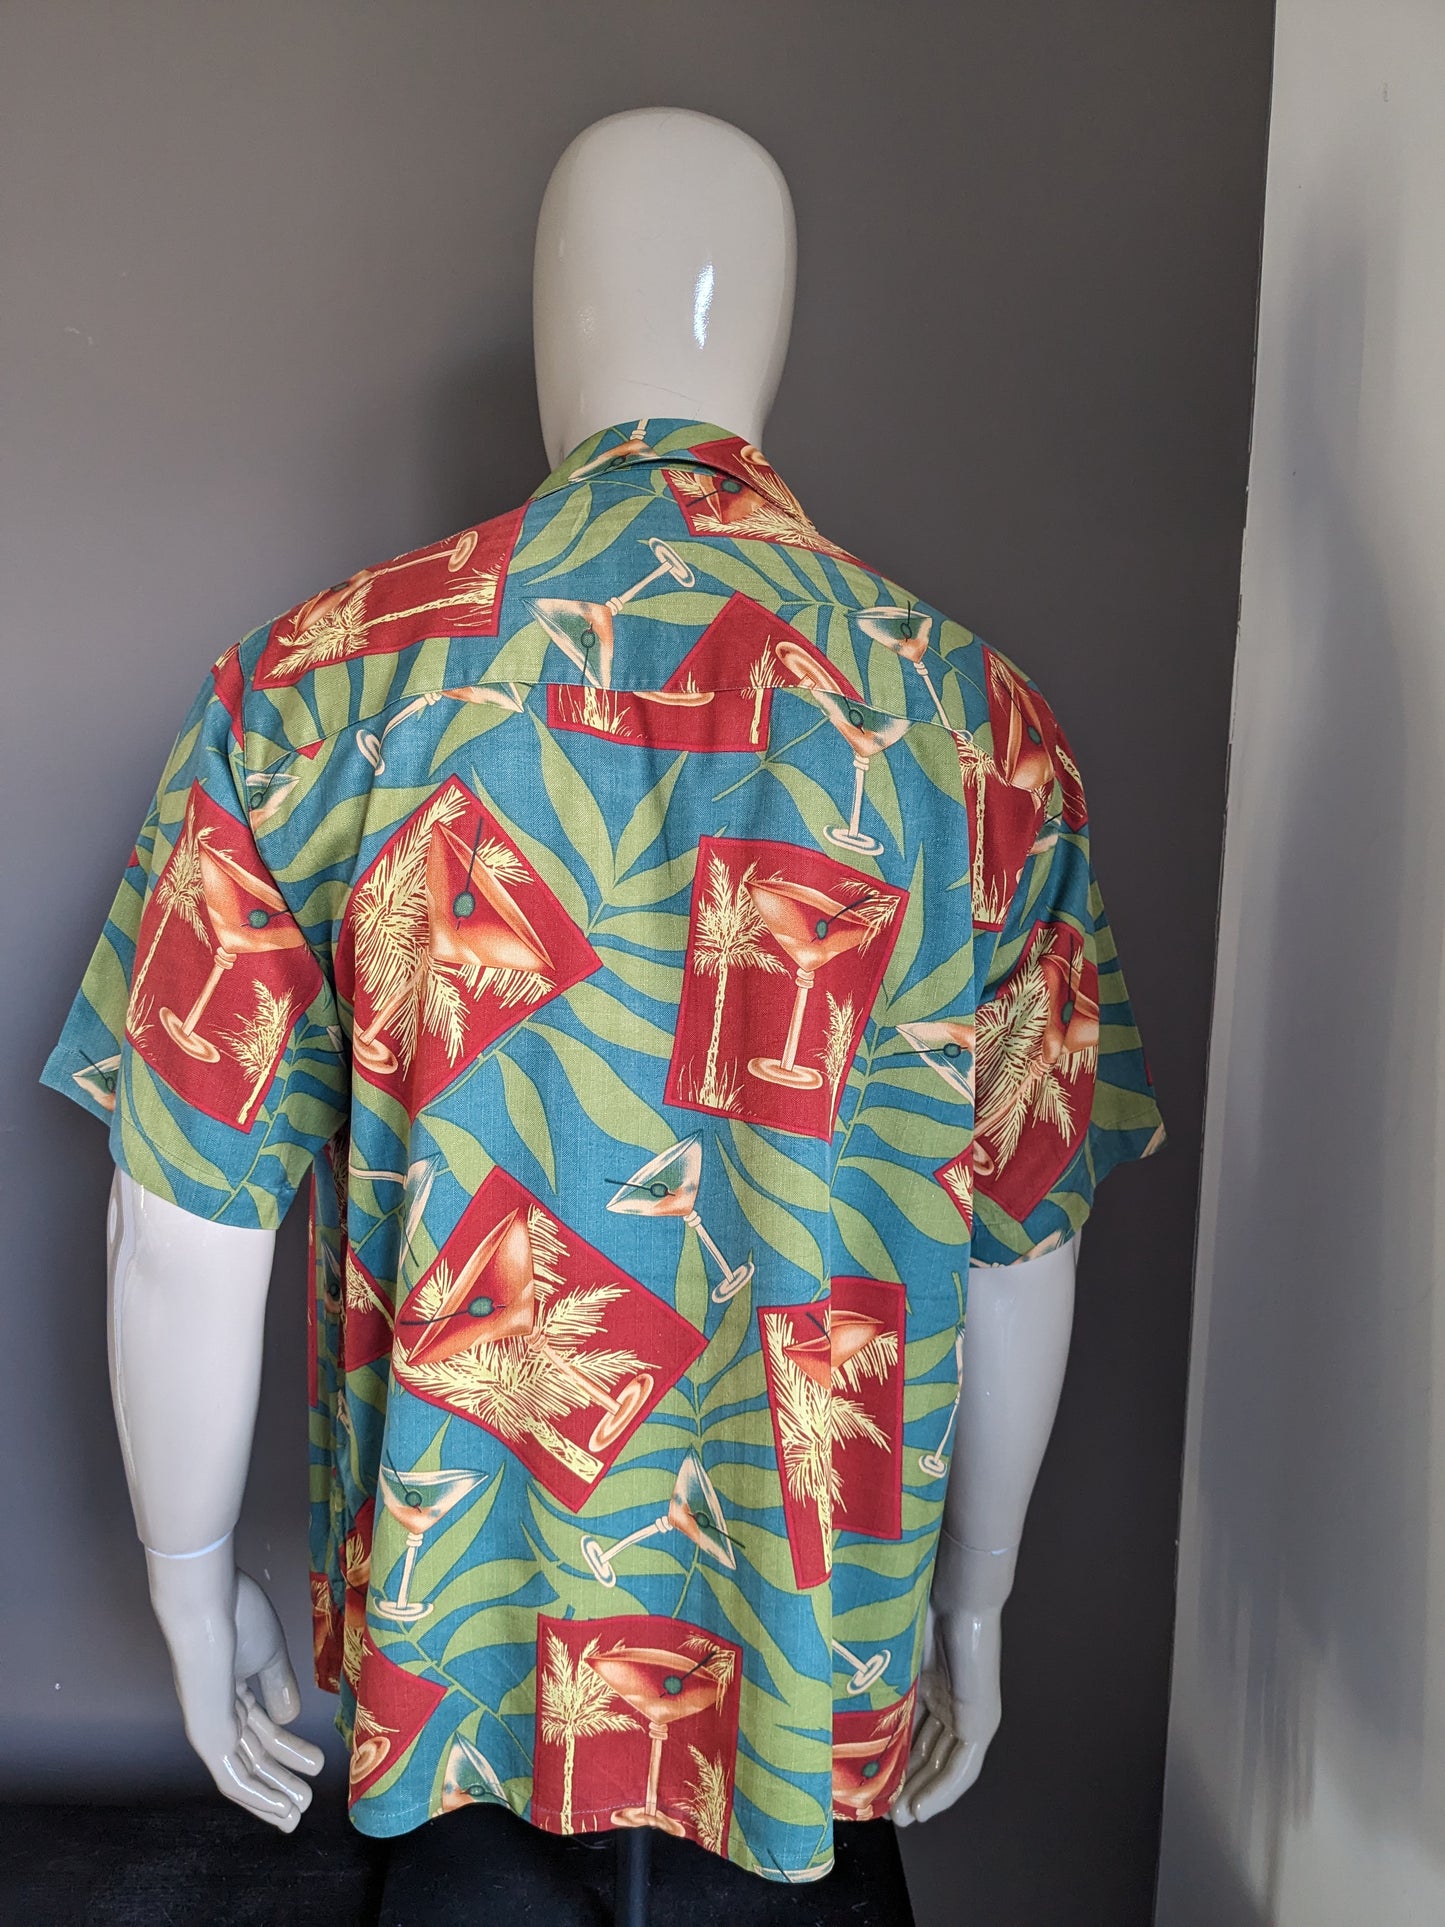 Banana Cabana Original Hawaii Camiseta Camiseta corta. Estampado azul rojo verde. Tamaño L / XL.